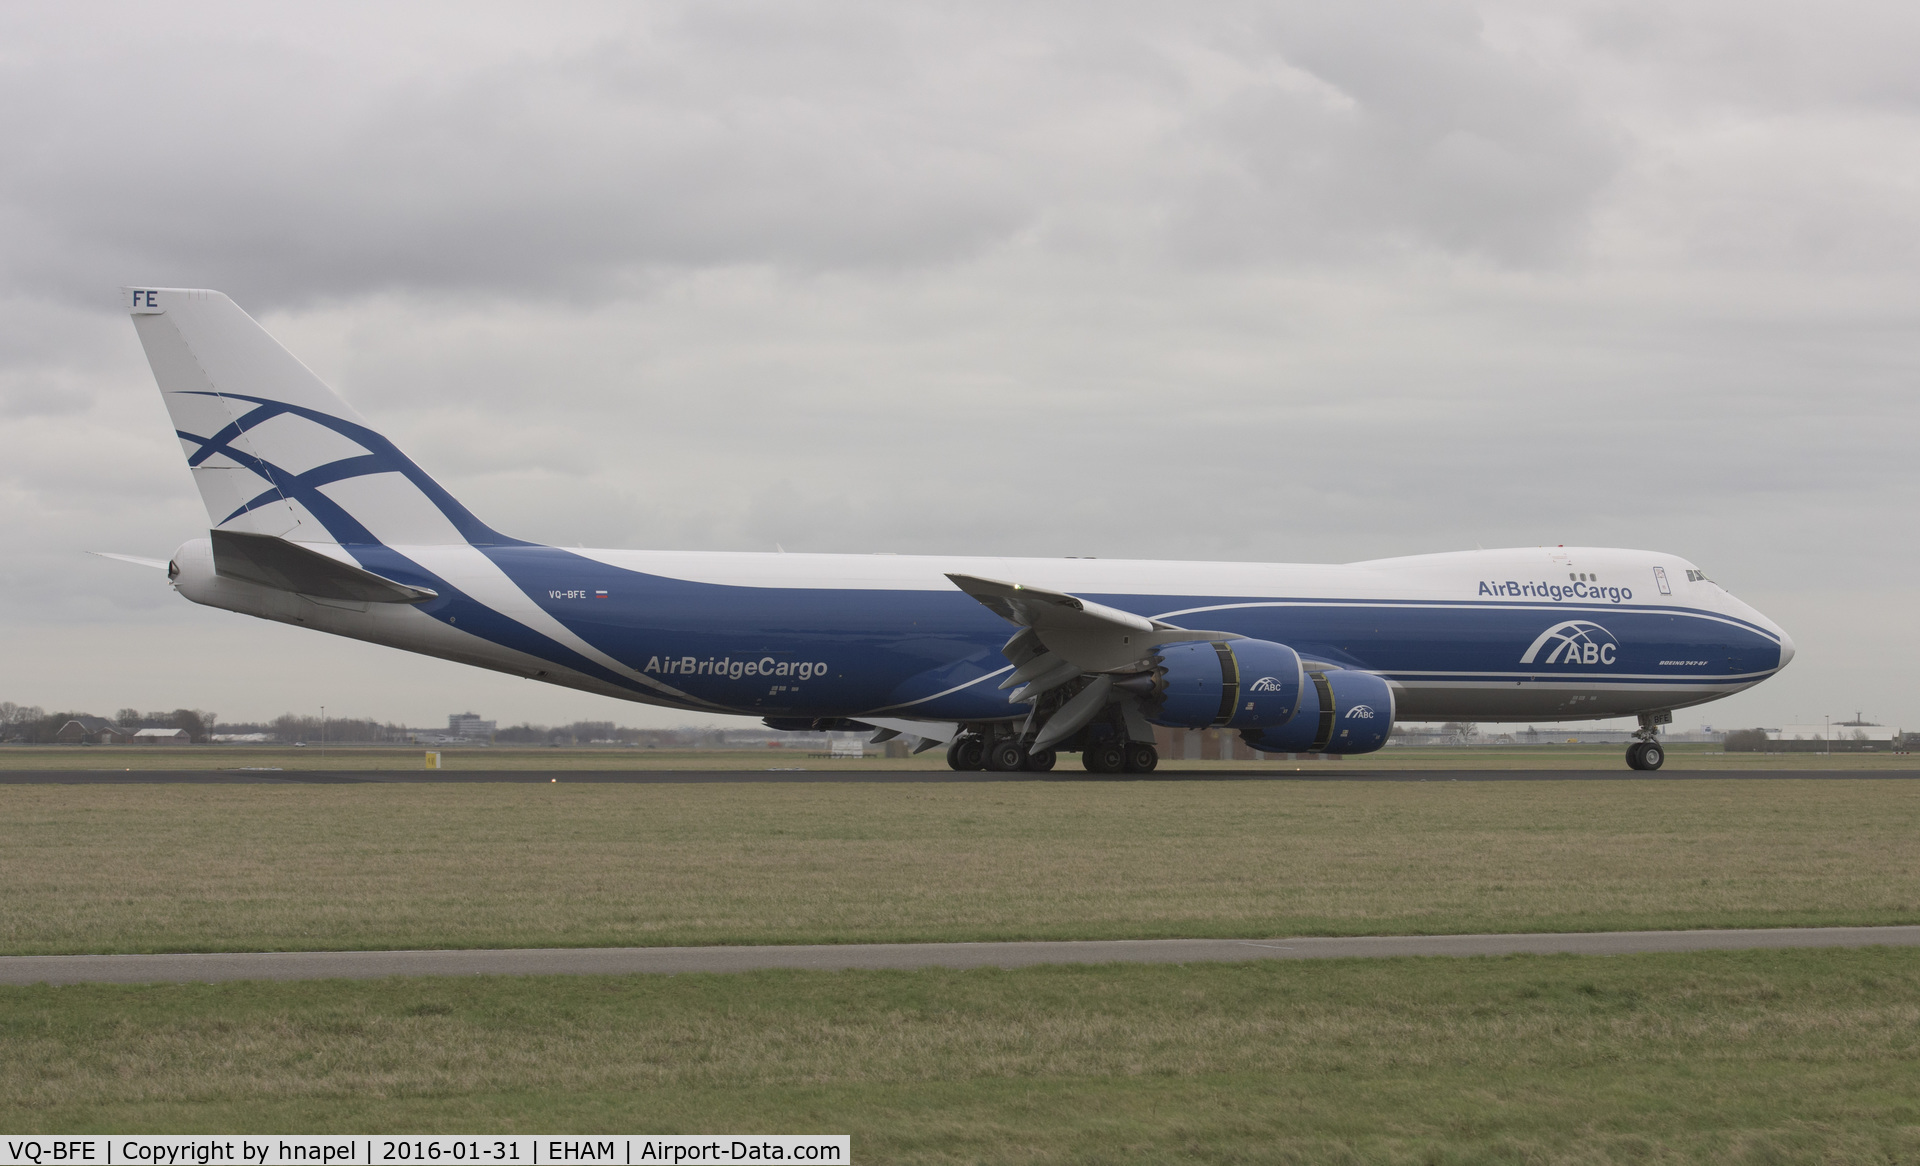 VQ-BFE, 2014 Boeing 747-83QF C/N 60118, 18R landing